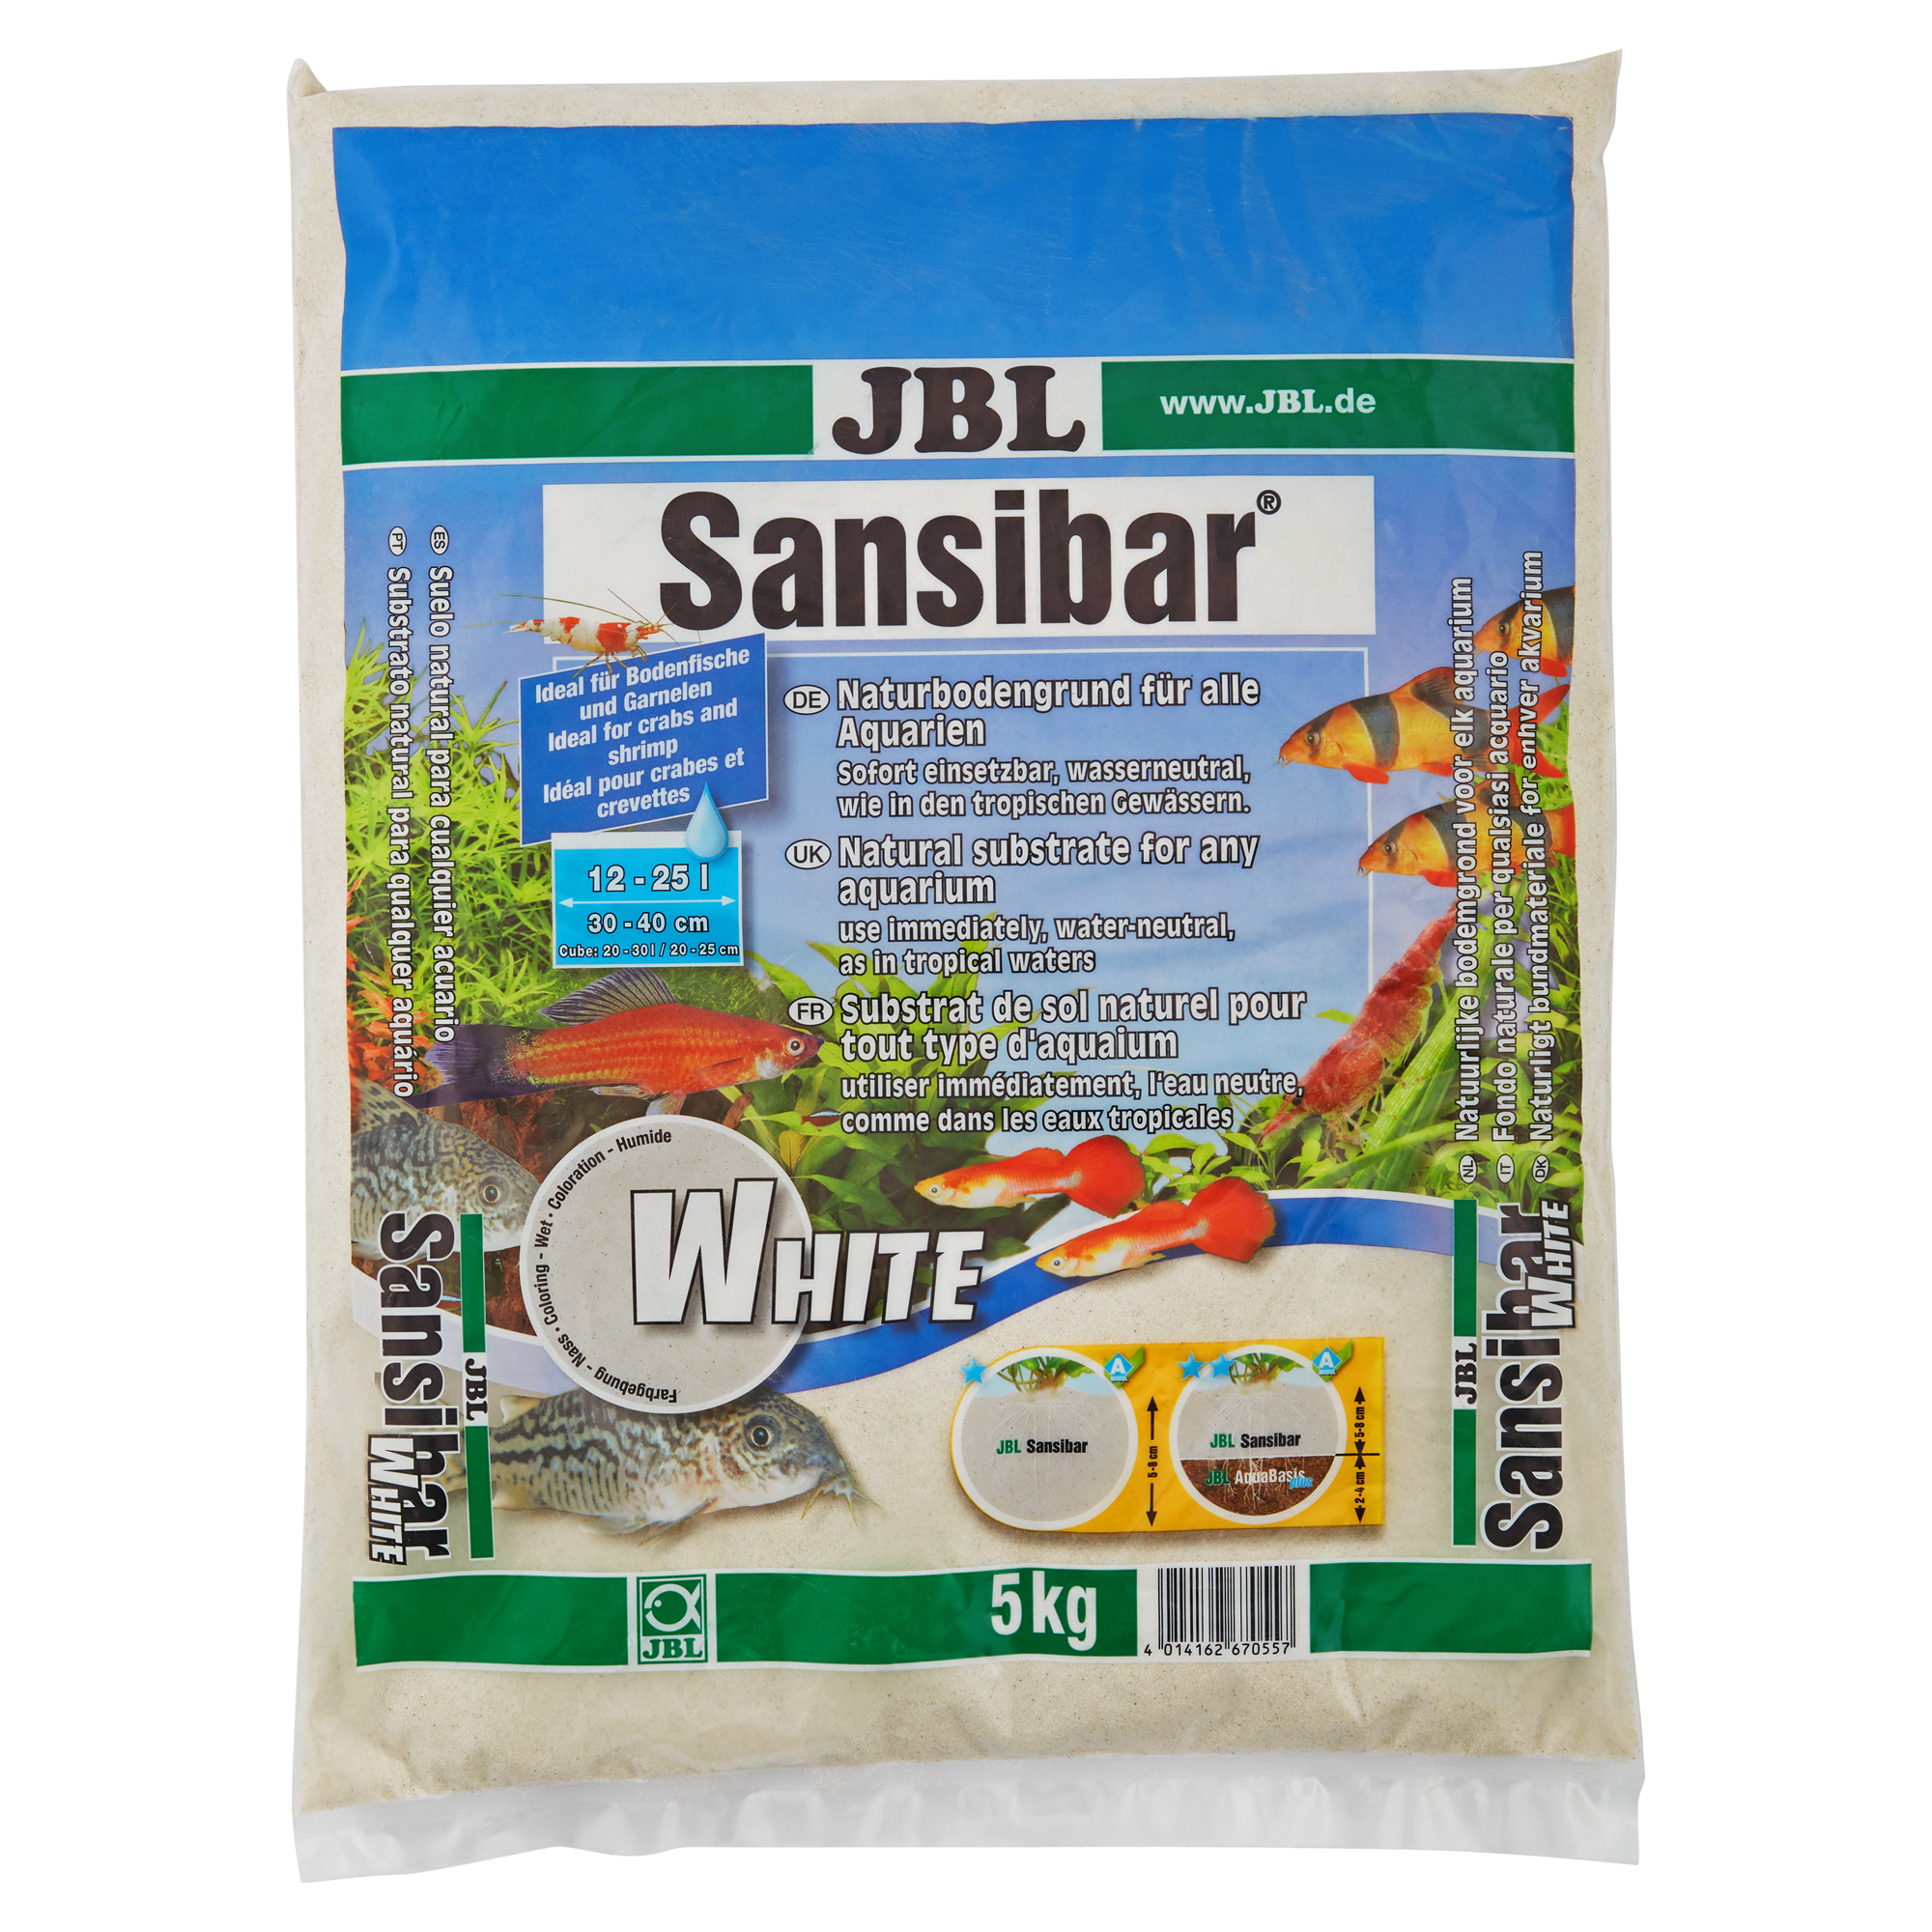 Naturbodengrund 'Sansibar' white 5 kg + product picture